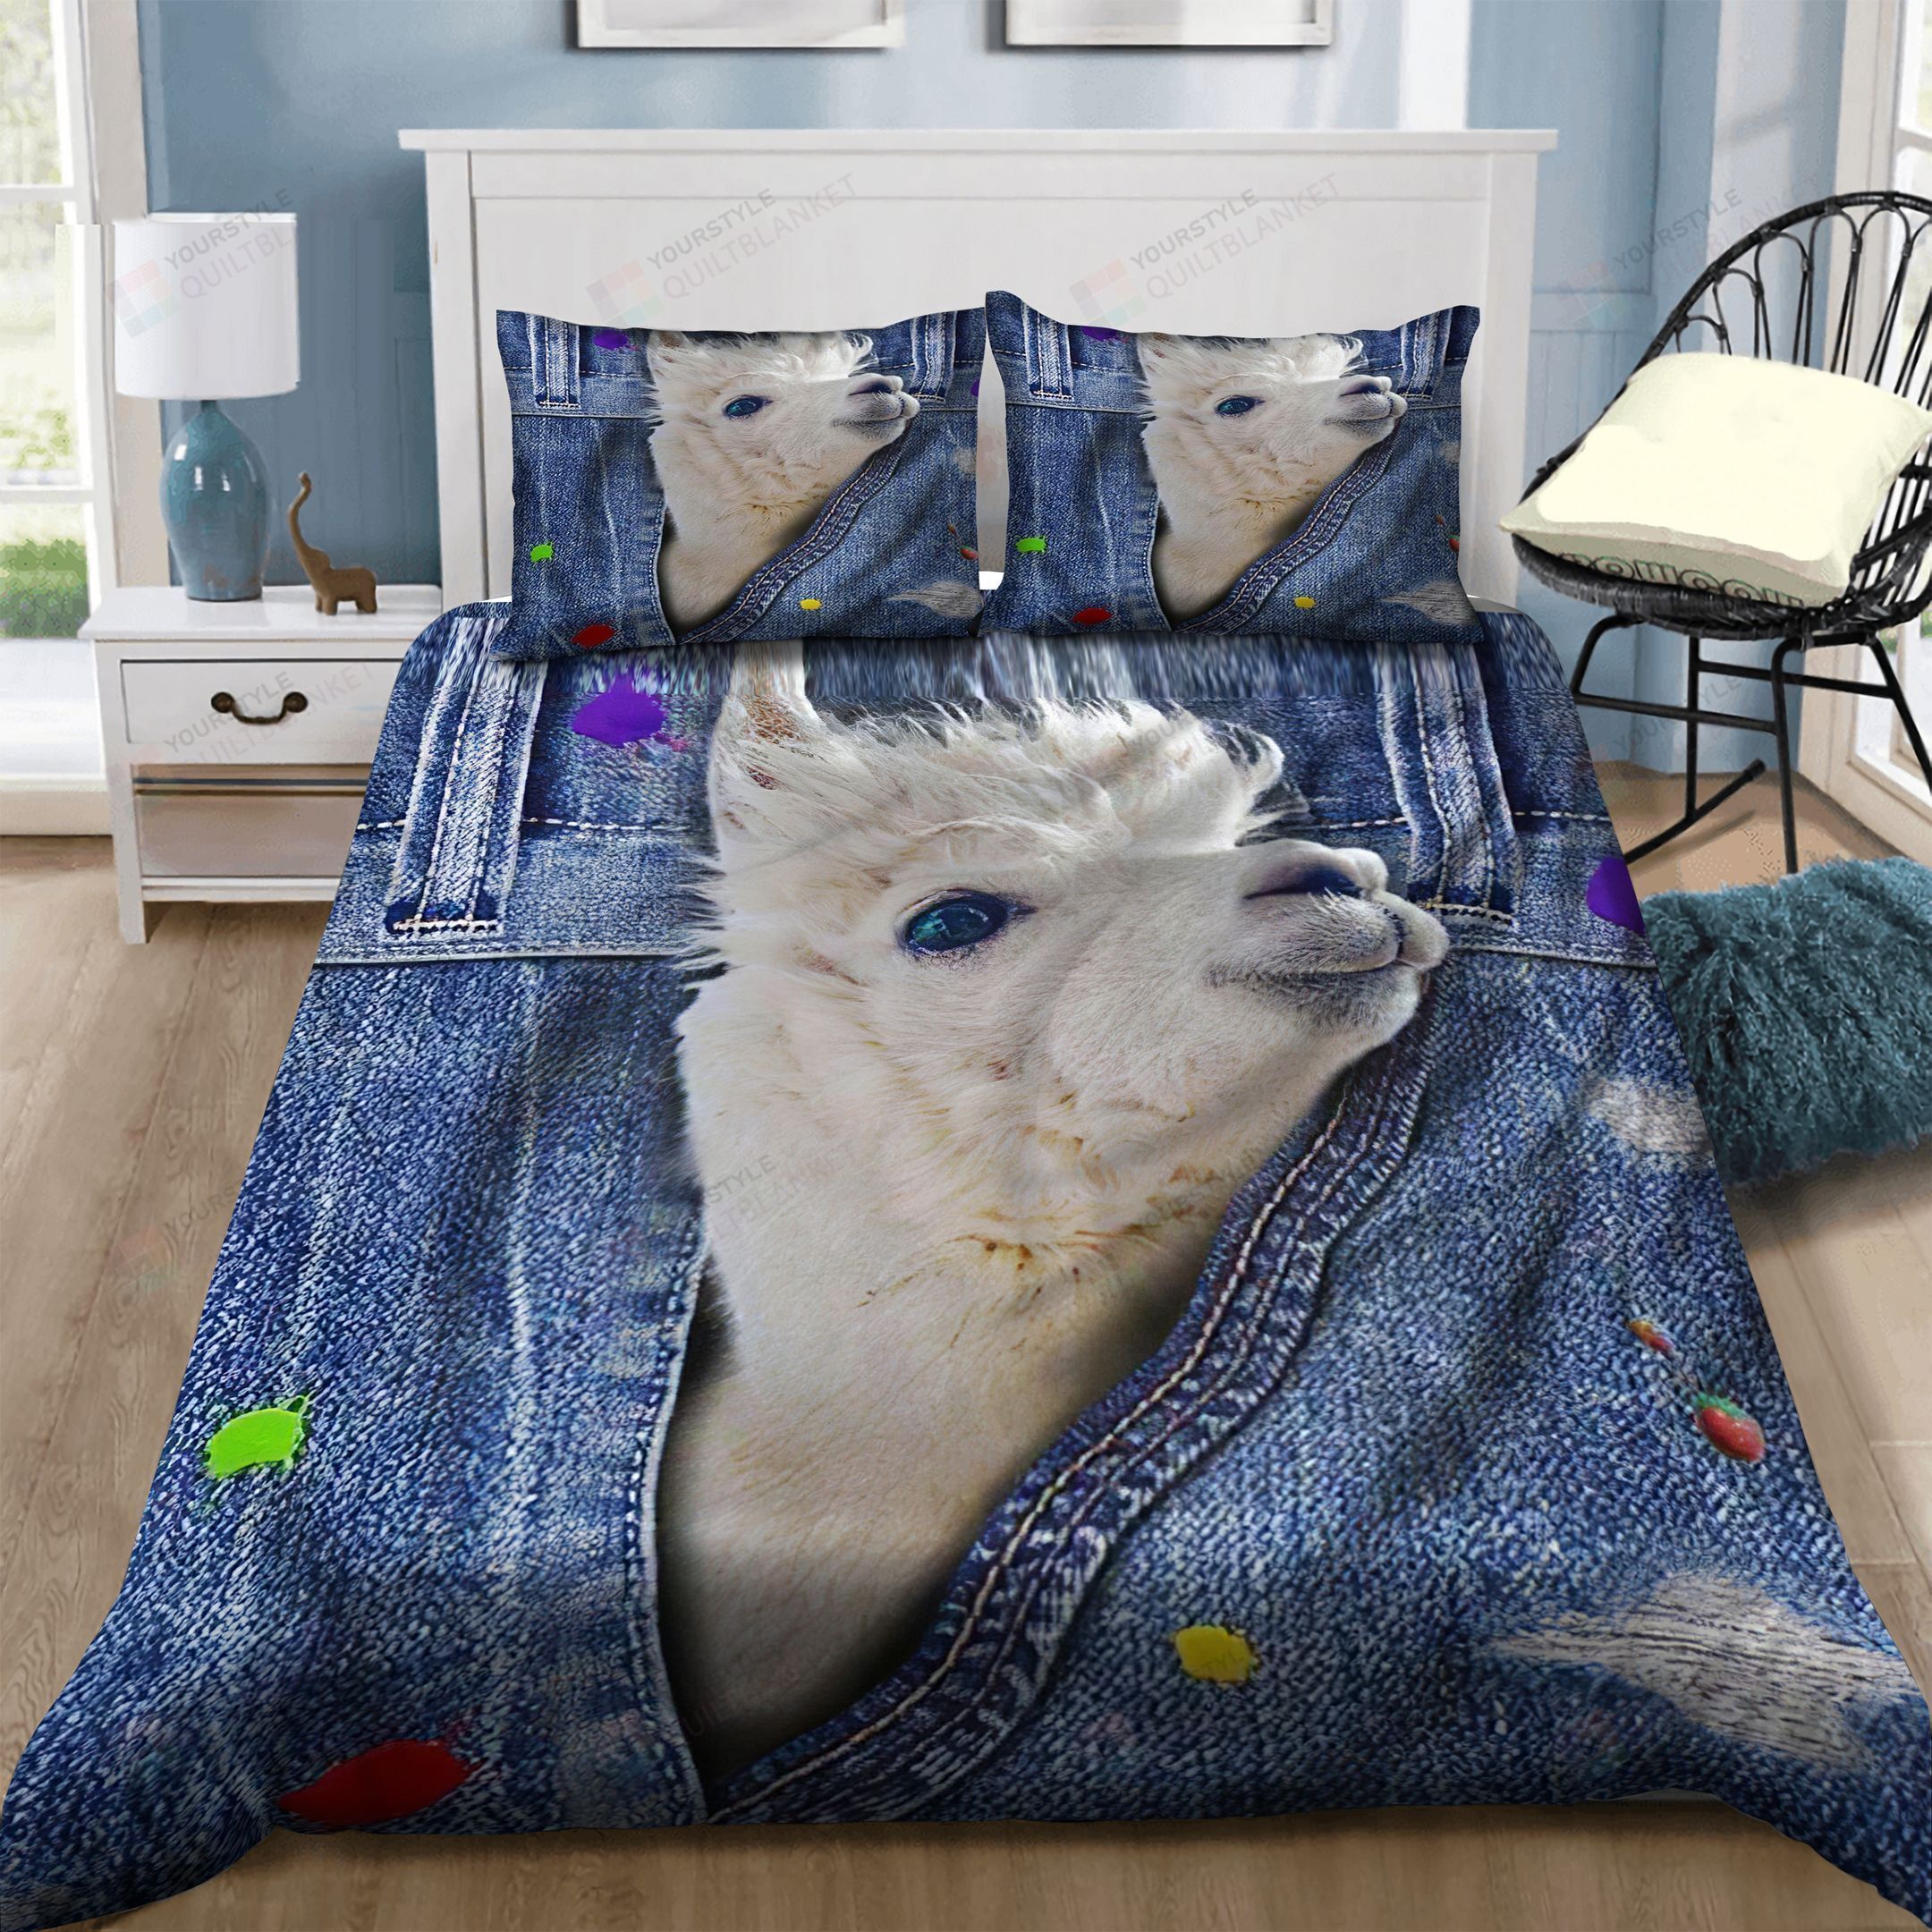 Llama Cotton Bed Sheets Spread Comforter Duvet Cover Bedding Sets